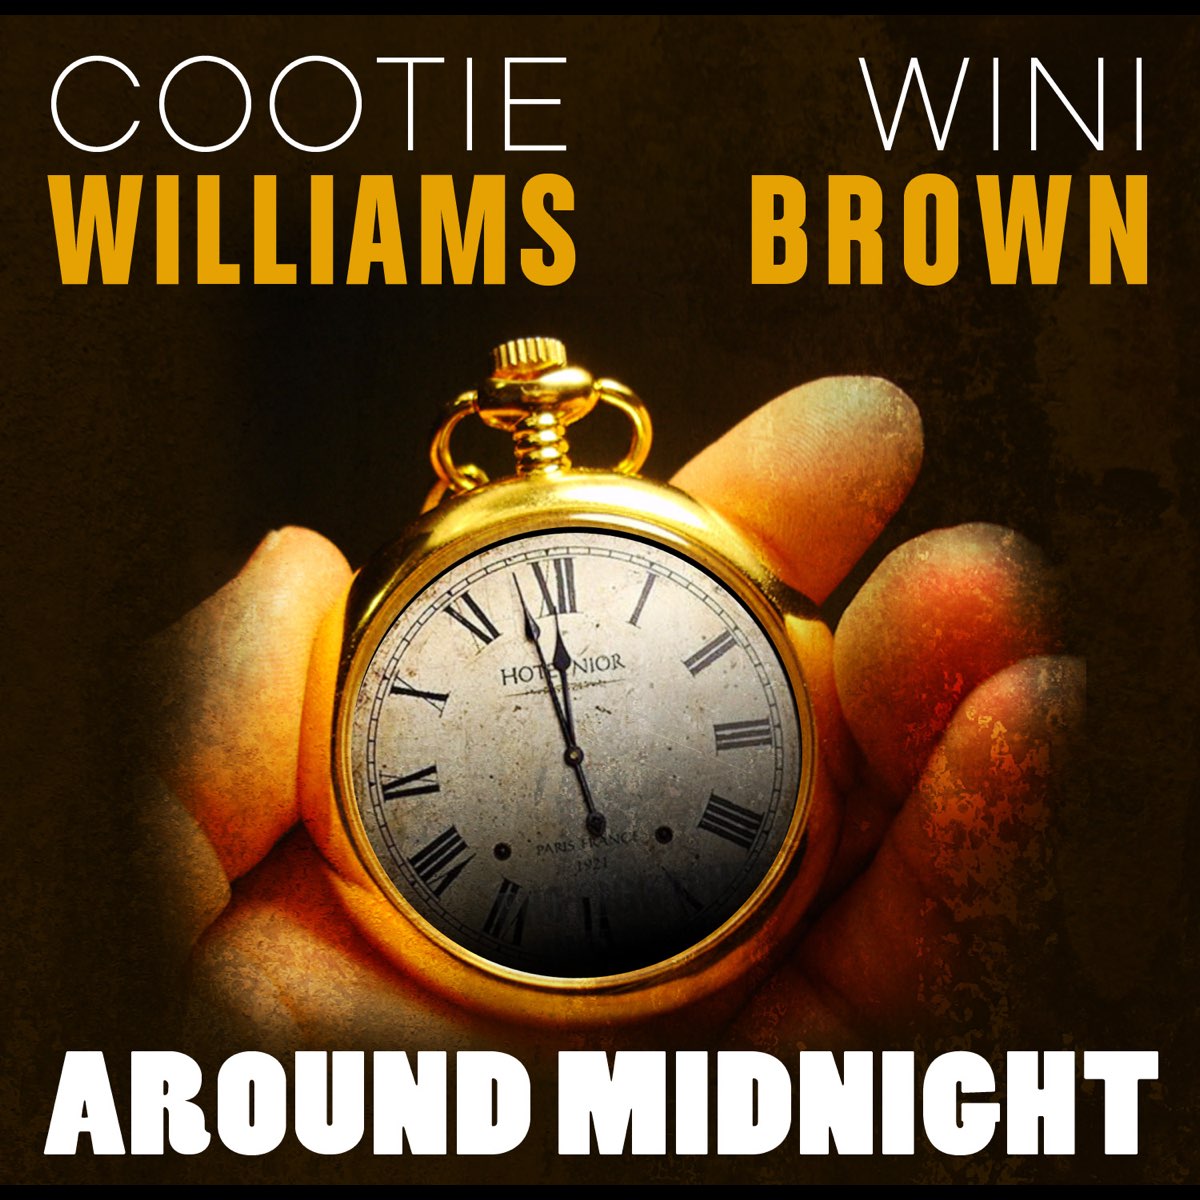 Around midnight. Cootie Williams.